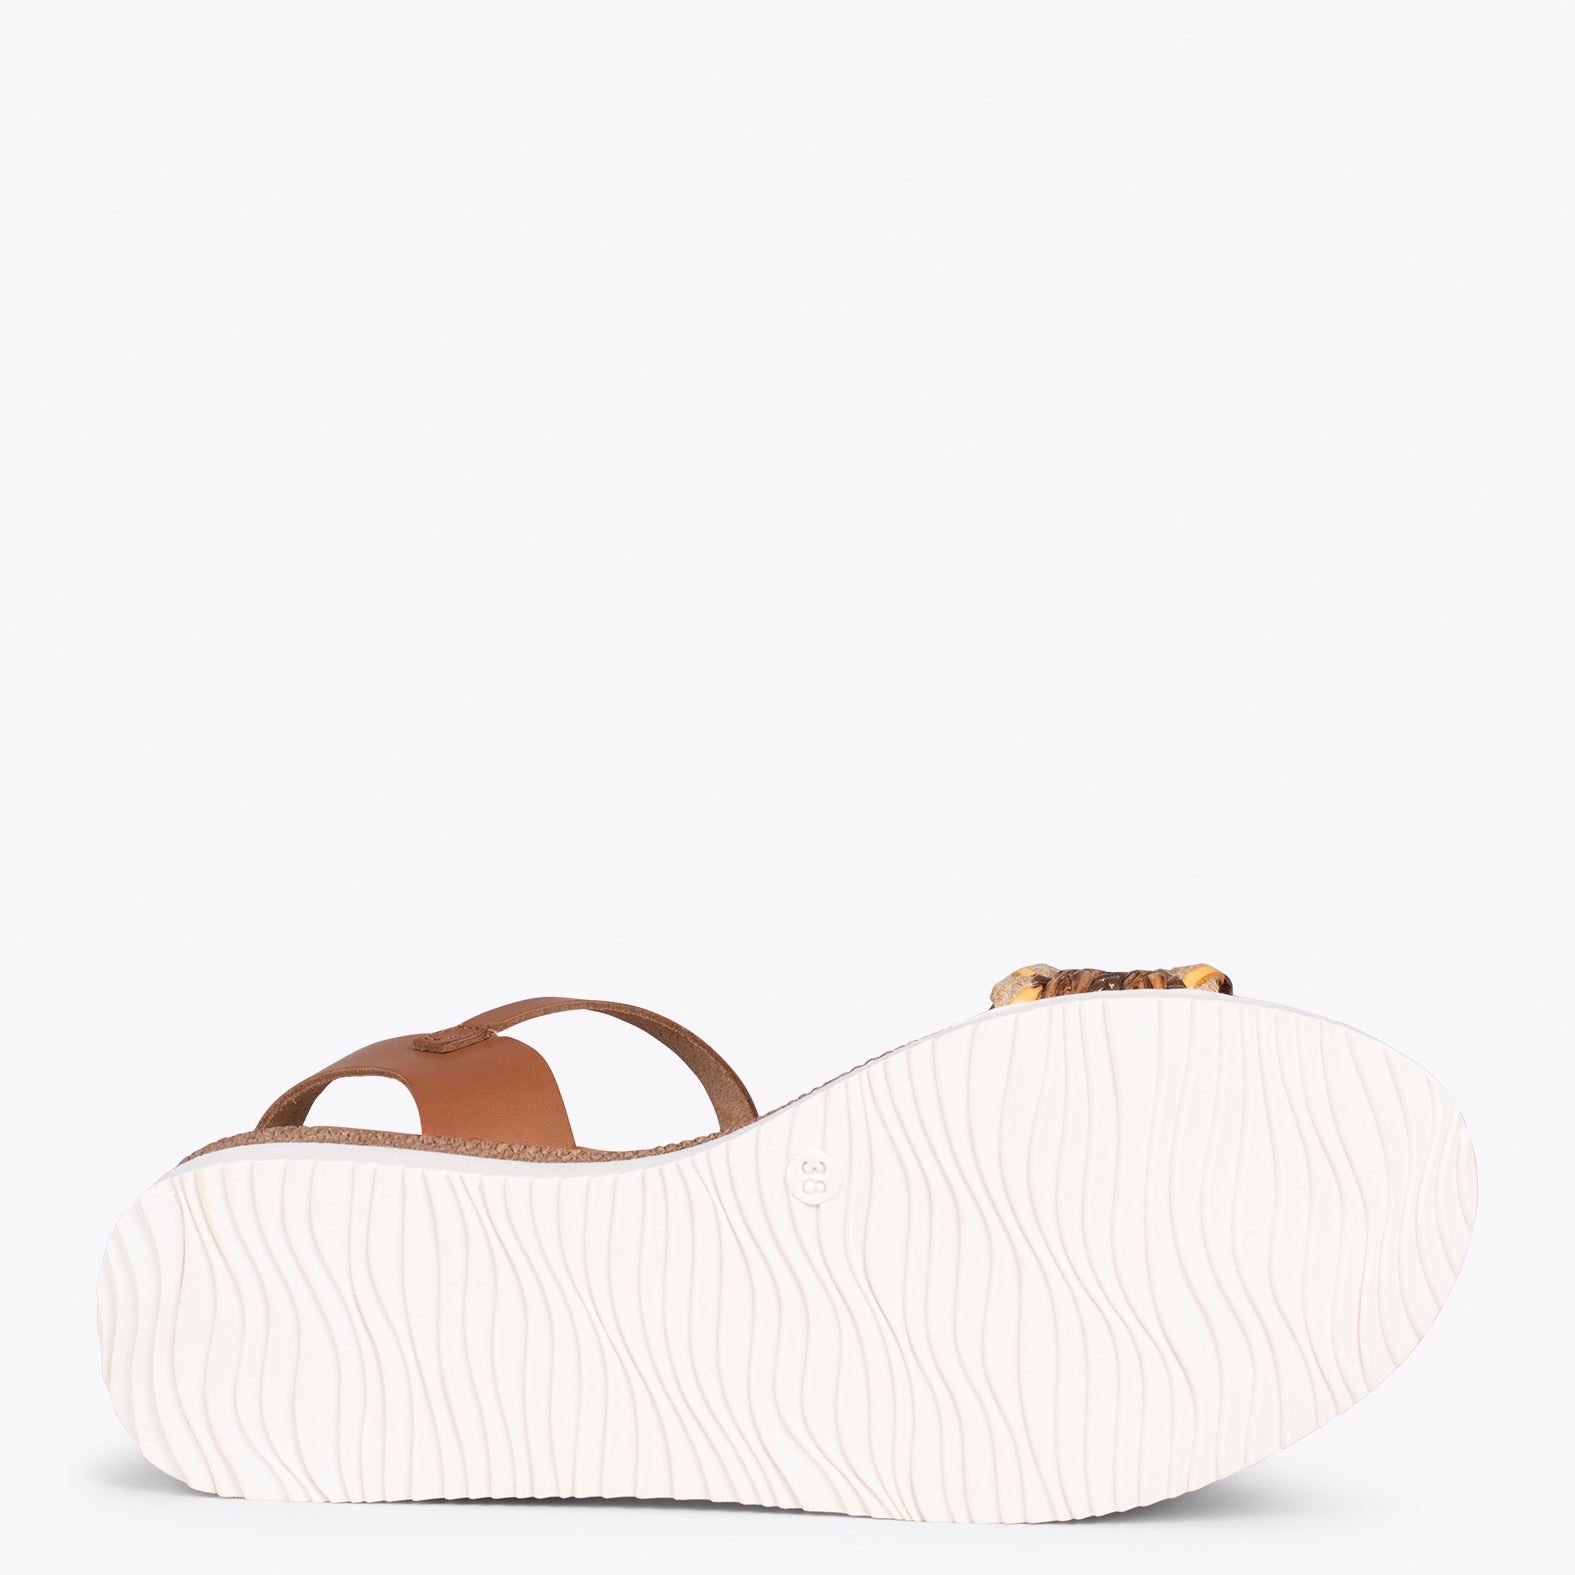 BENISSA – CAMEL raffia flat sandals23129 ROBLE